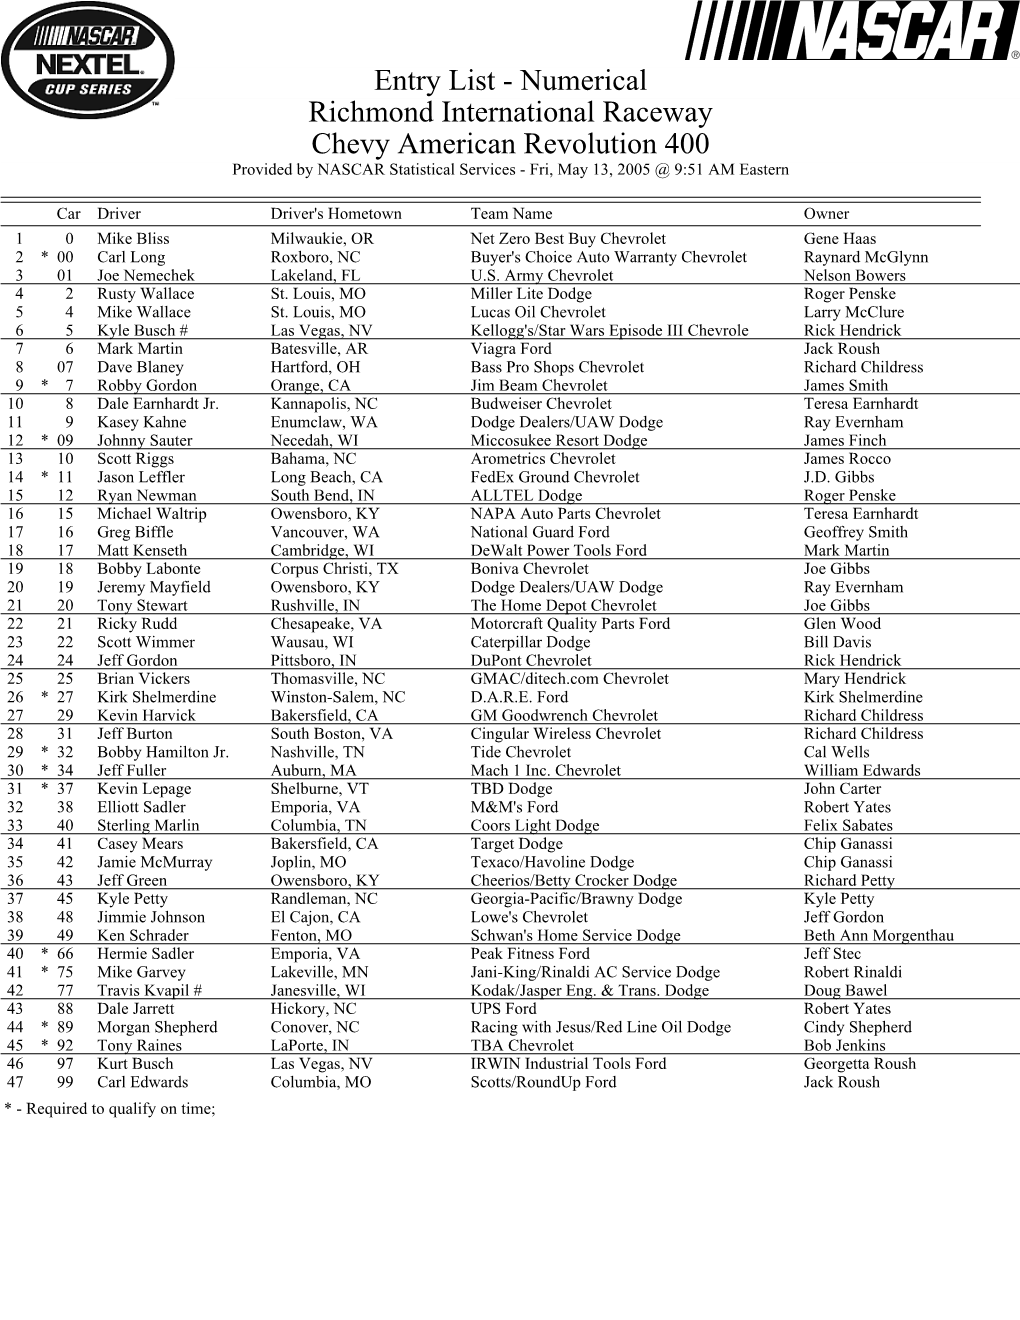 Entry List - Numerical Richmond International Raceway Chevy American Revolution 400 Provided by NASCAR Statistical Services - Fri, May 13, 2005 @ 9:51 AM Eastern